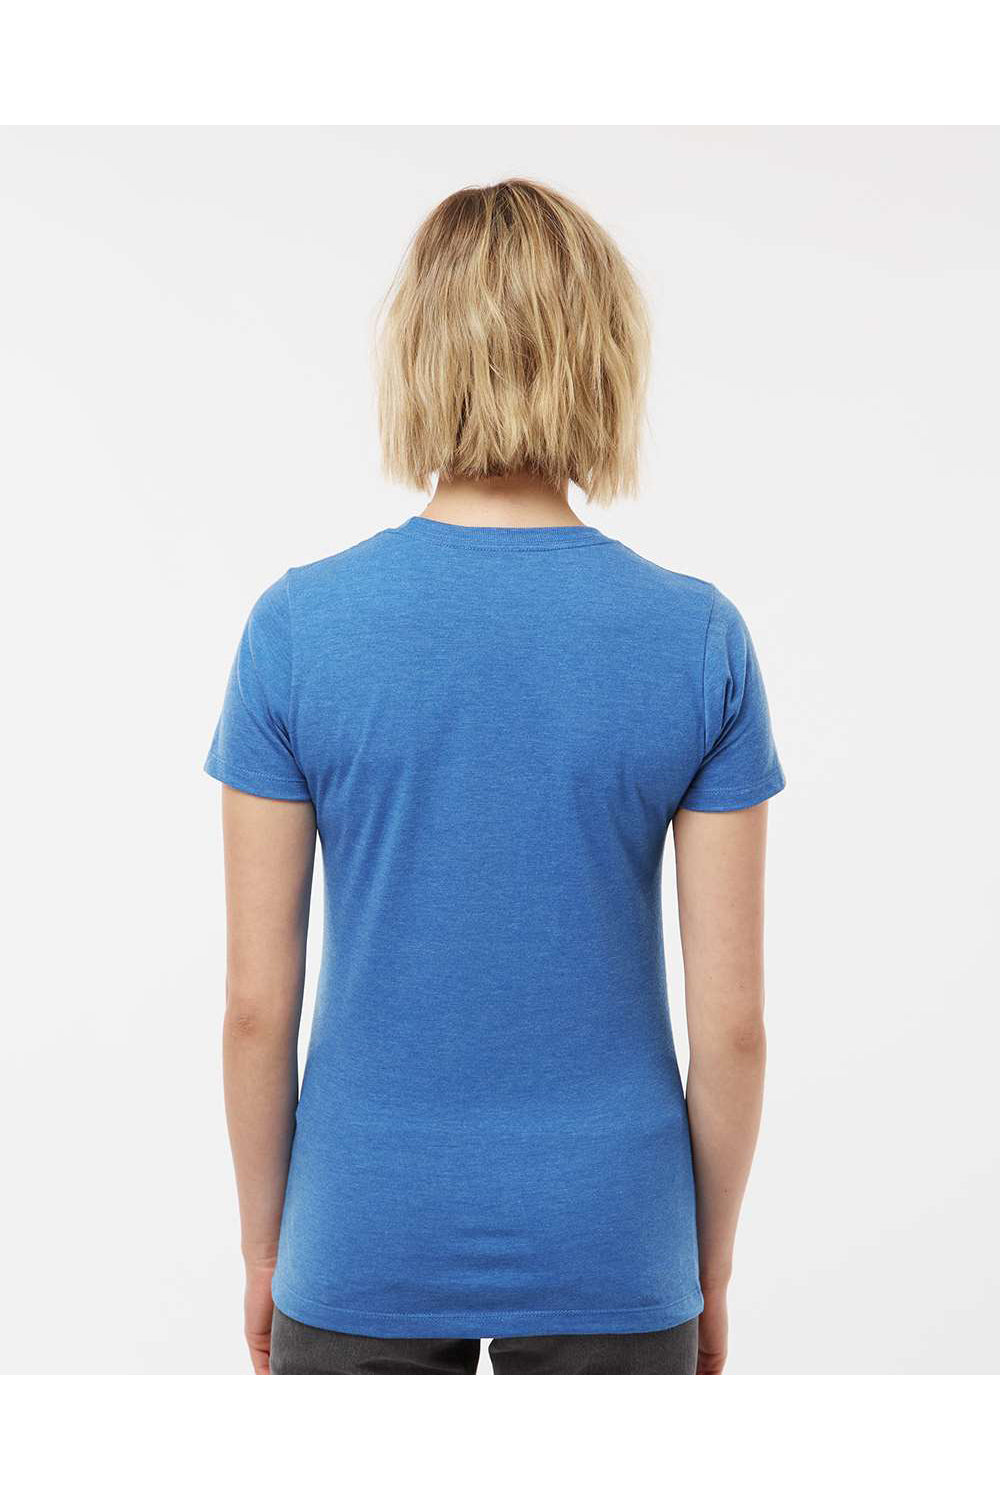 Tultex 542 Womens Premium Short Sleeve Crewneck T-Shirt Heather Royal Blue Model Back